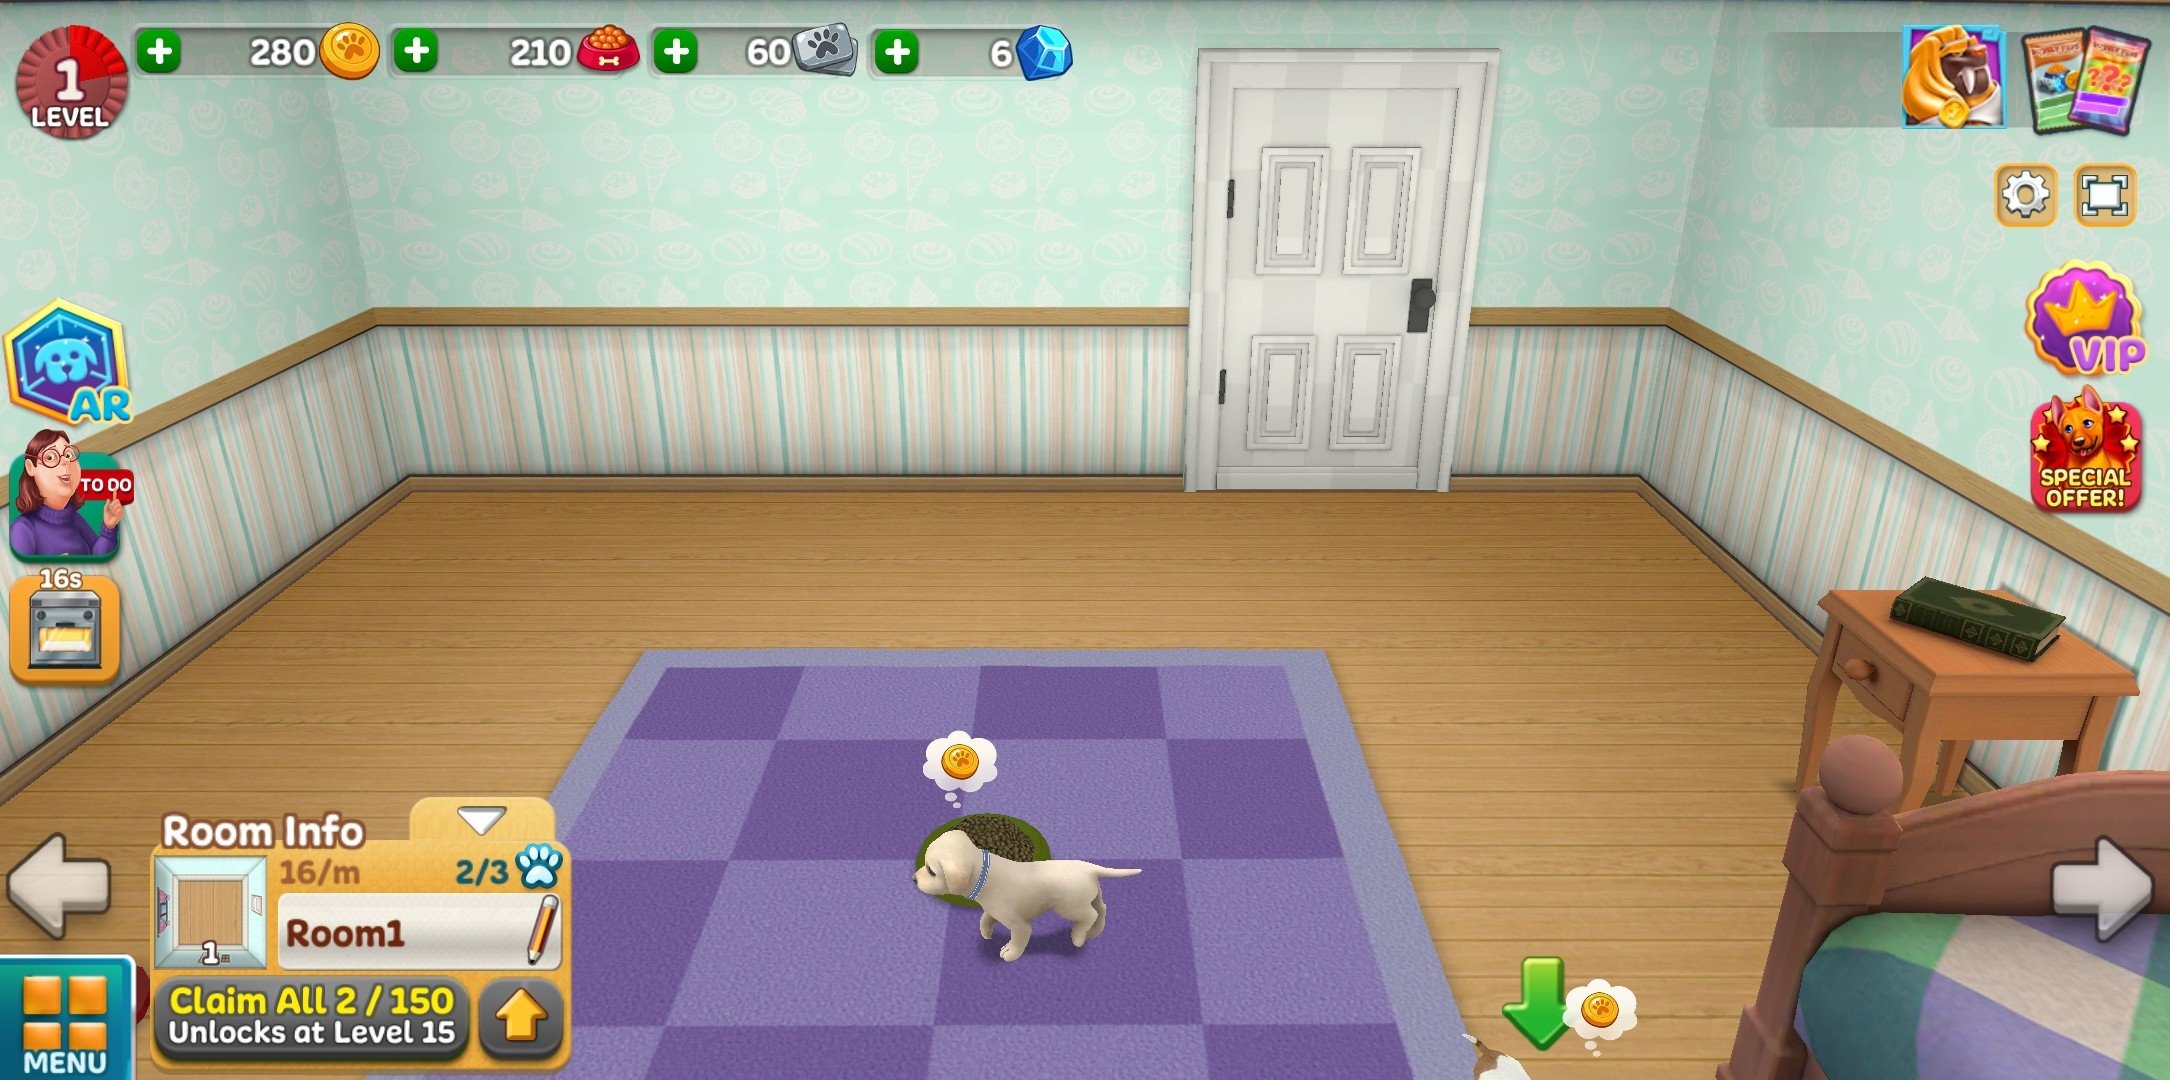 Dog Town: Pet Simulation Game